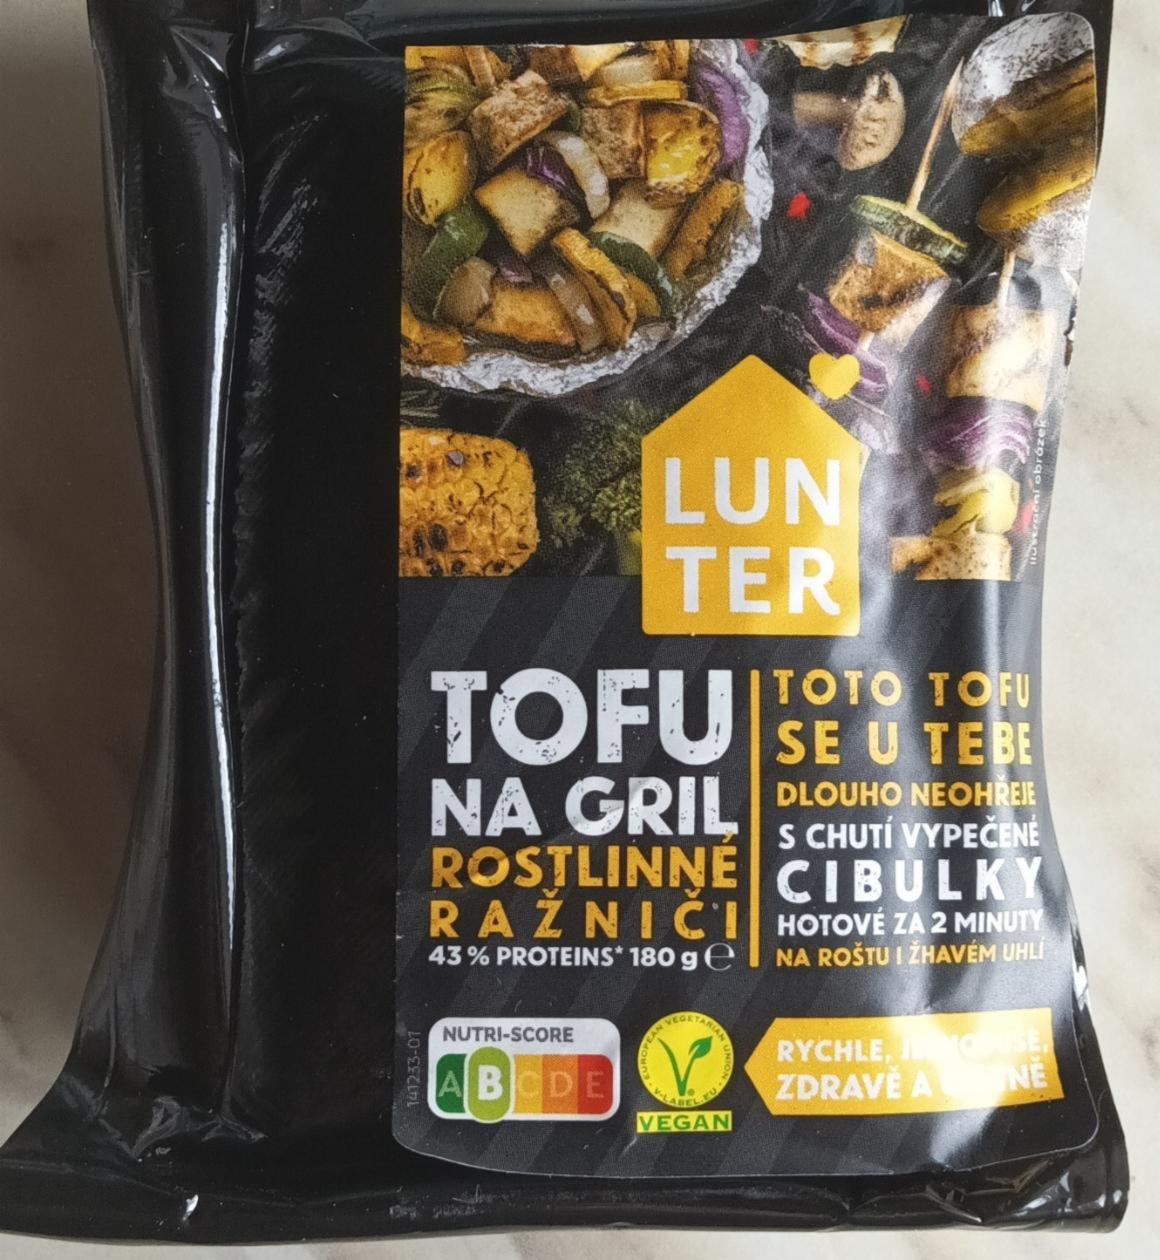 Fotografie - Tofu na gril rostlinné ražniči Lunter